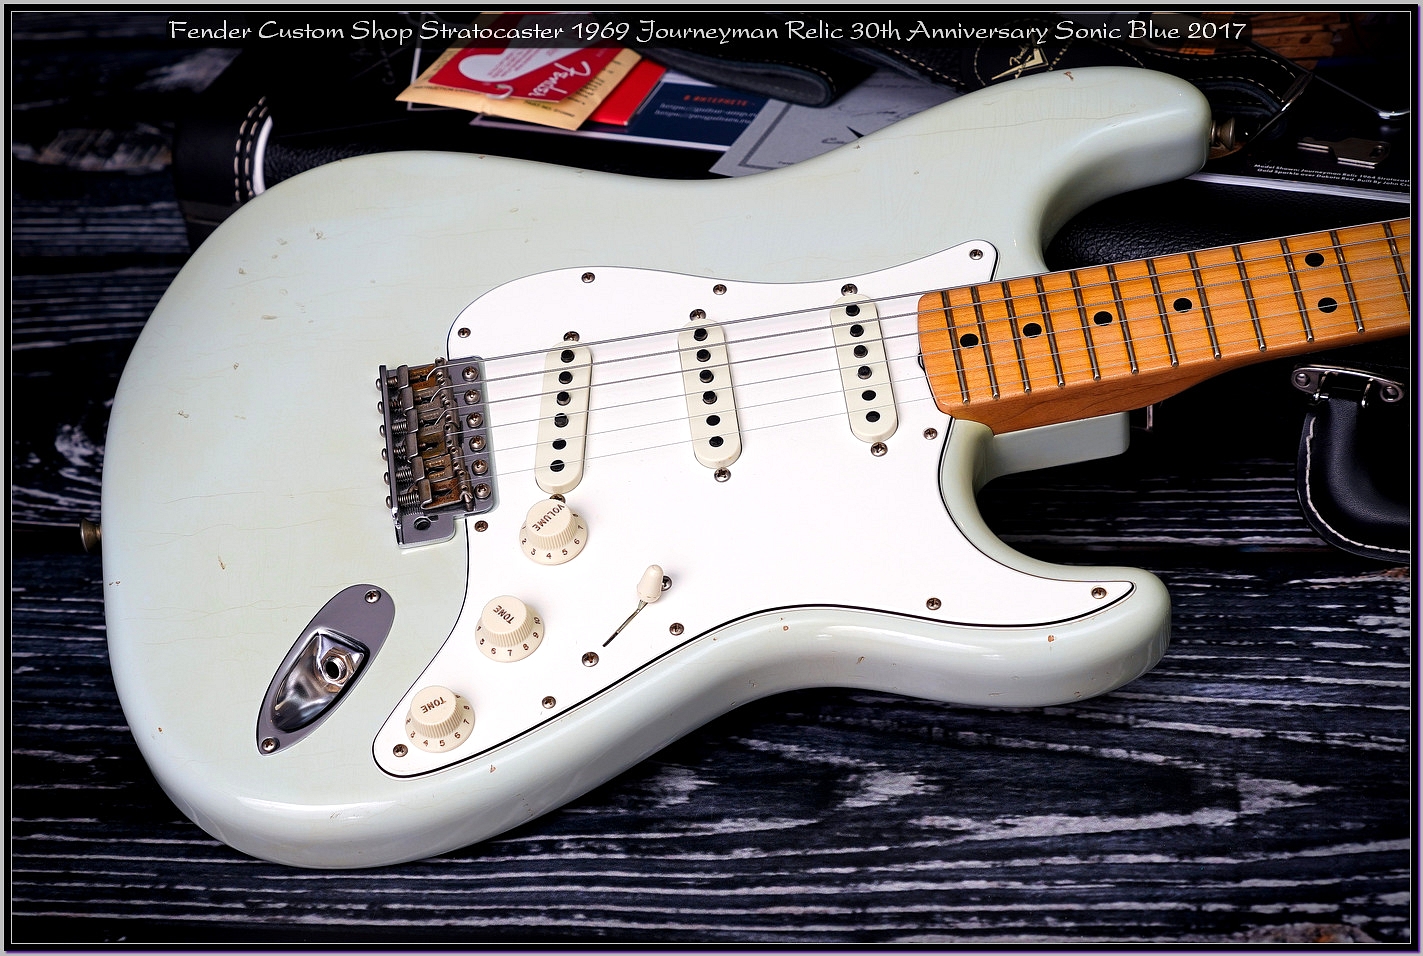 Fender Custom Shop Stratocaster 1969 Journeyman Relic 30th Anniversary Edition Sonic Blue 2017